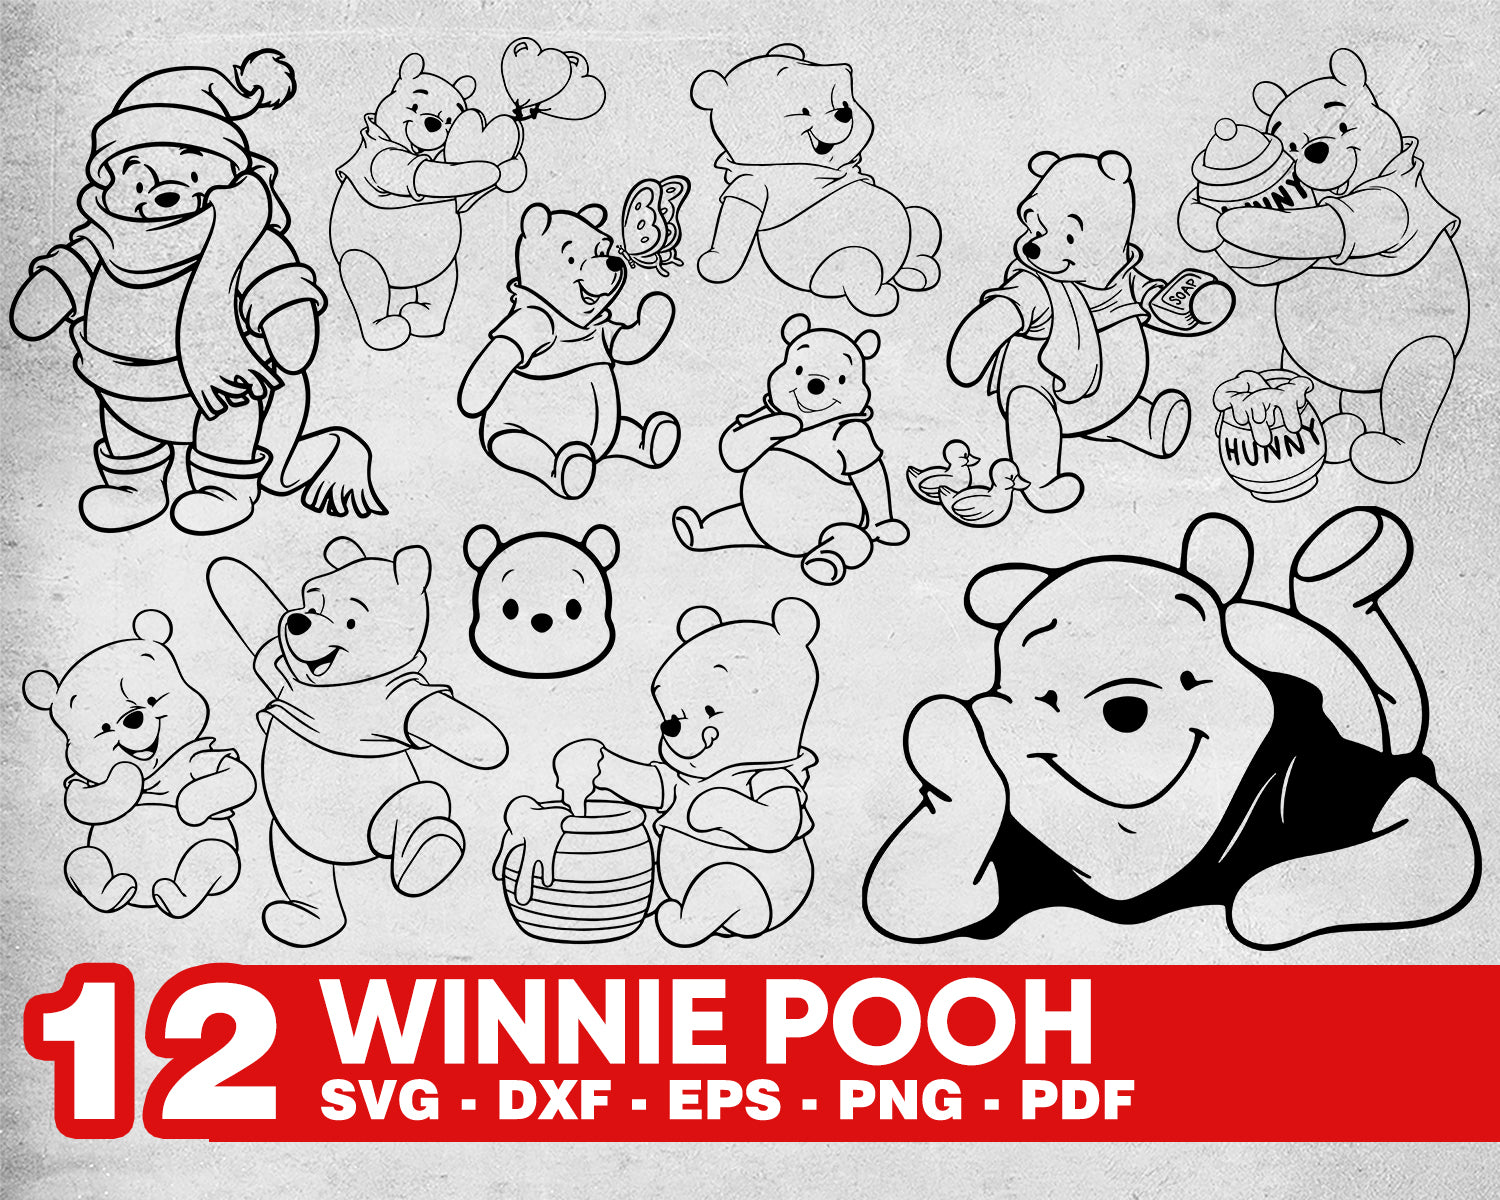 Winnie Pooh Svg Winnie The Pooh Svg Winnie The Pooh Winnie Pooh Wi Clipartic